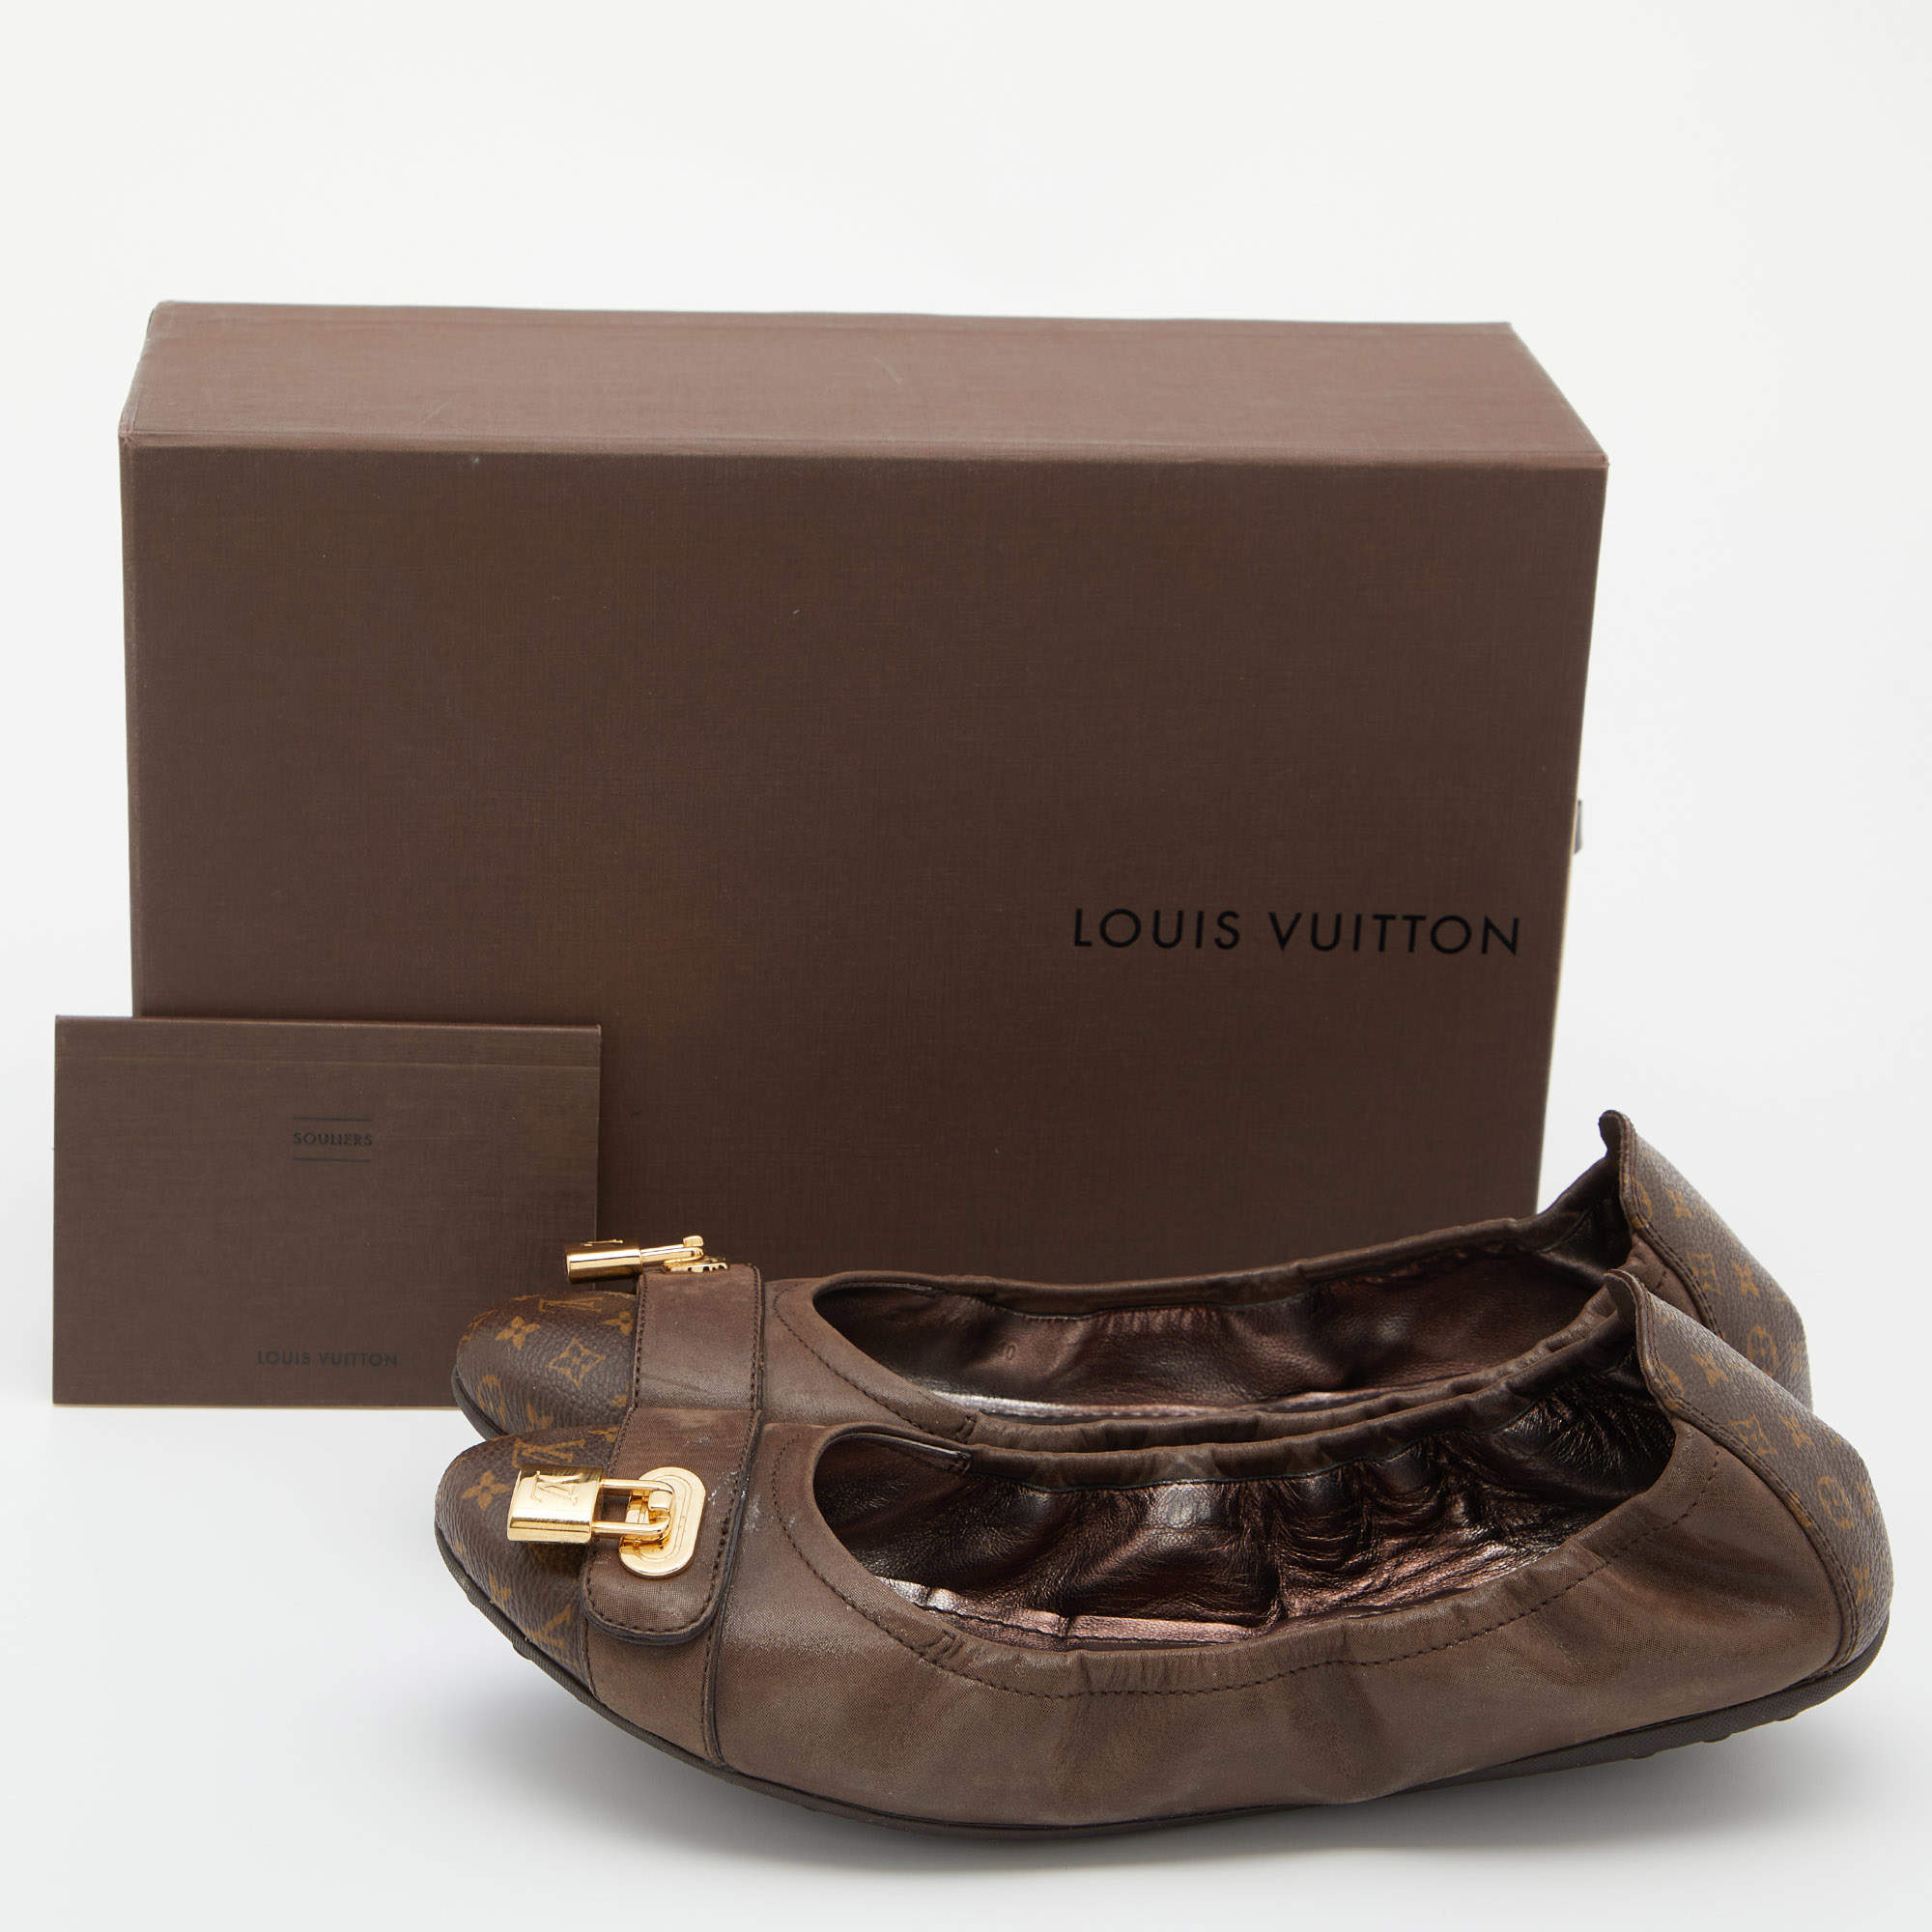 Louis Vuitton 'Love Story' Ballet Flats in colour Grenat (Garnet